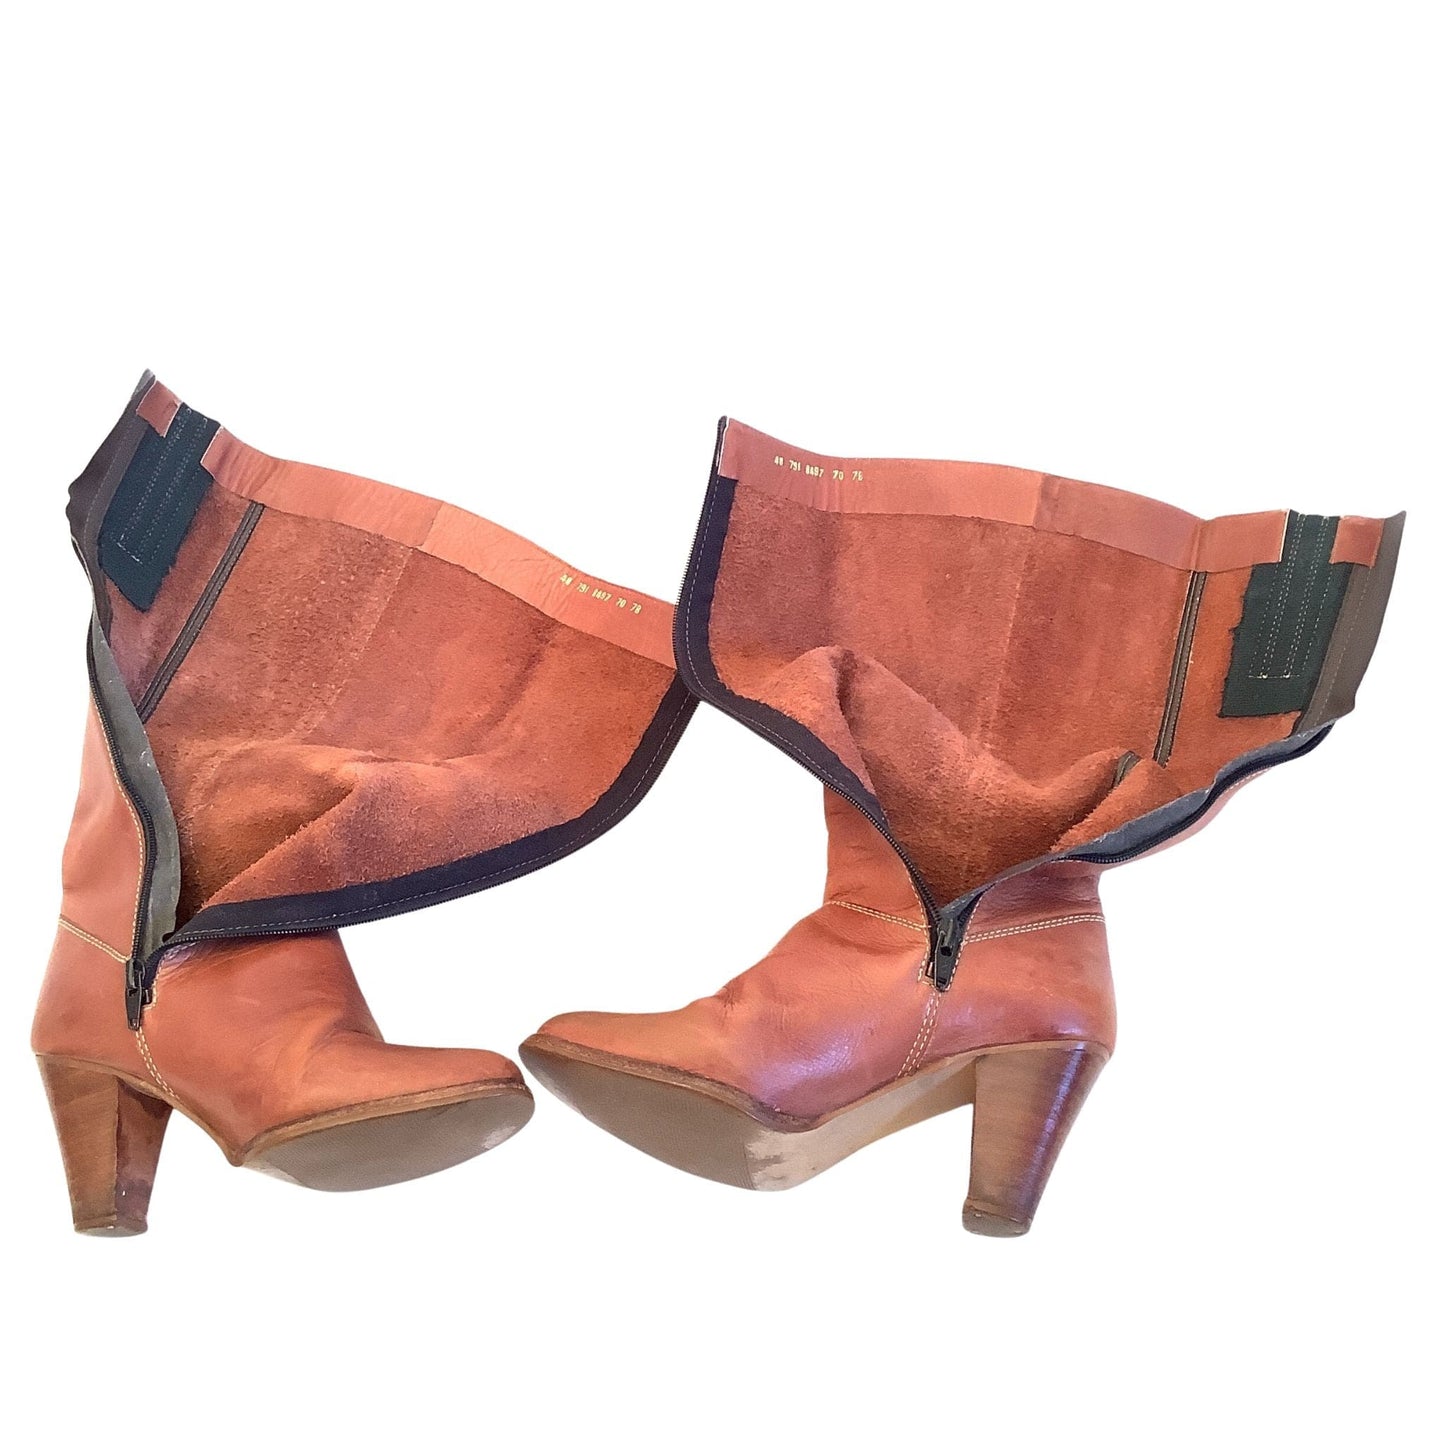 Imperial Heeled Boots 6.5 / Tan / Boho